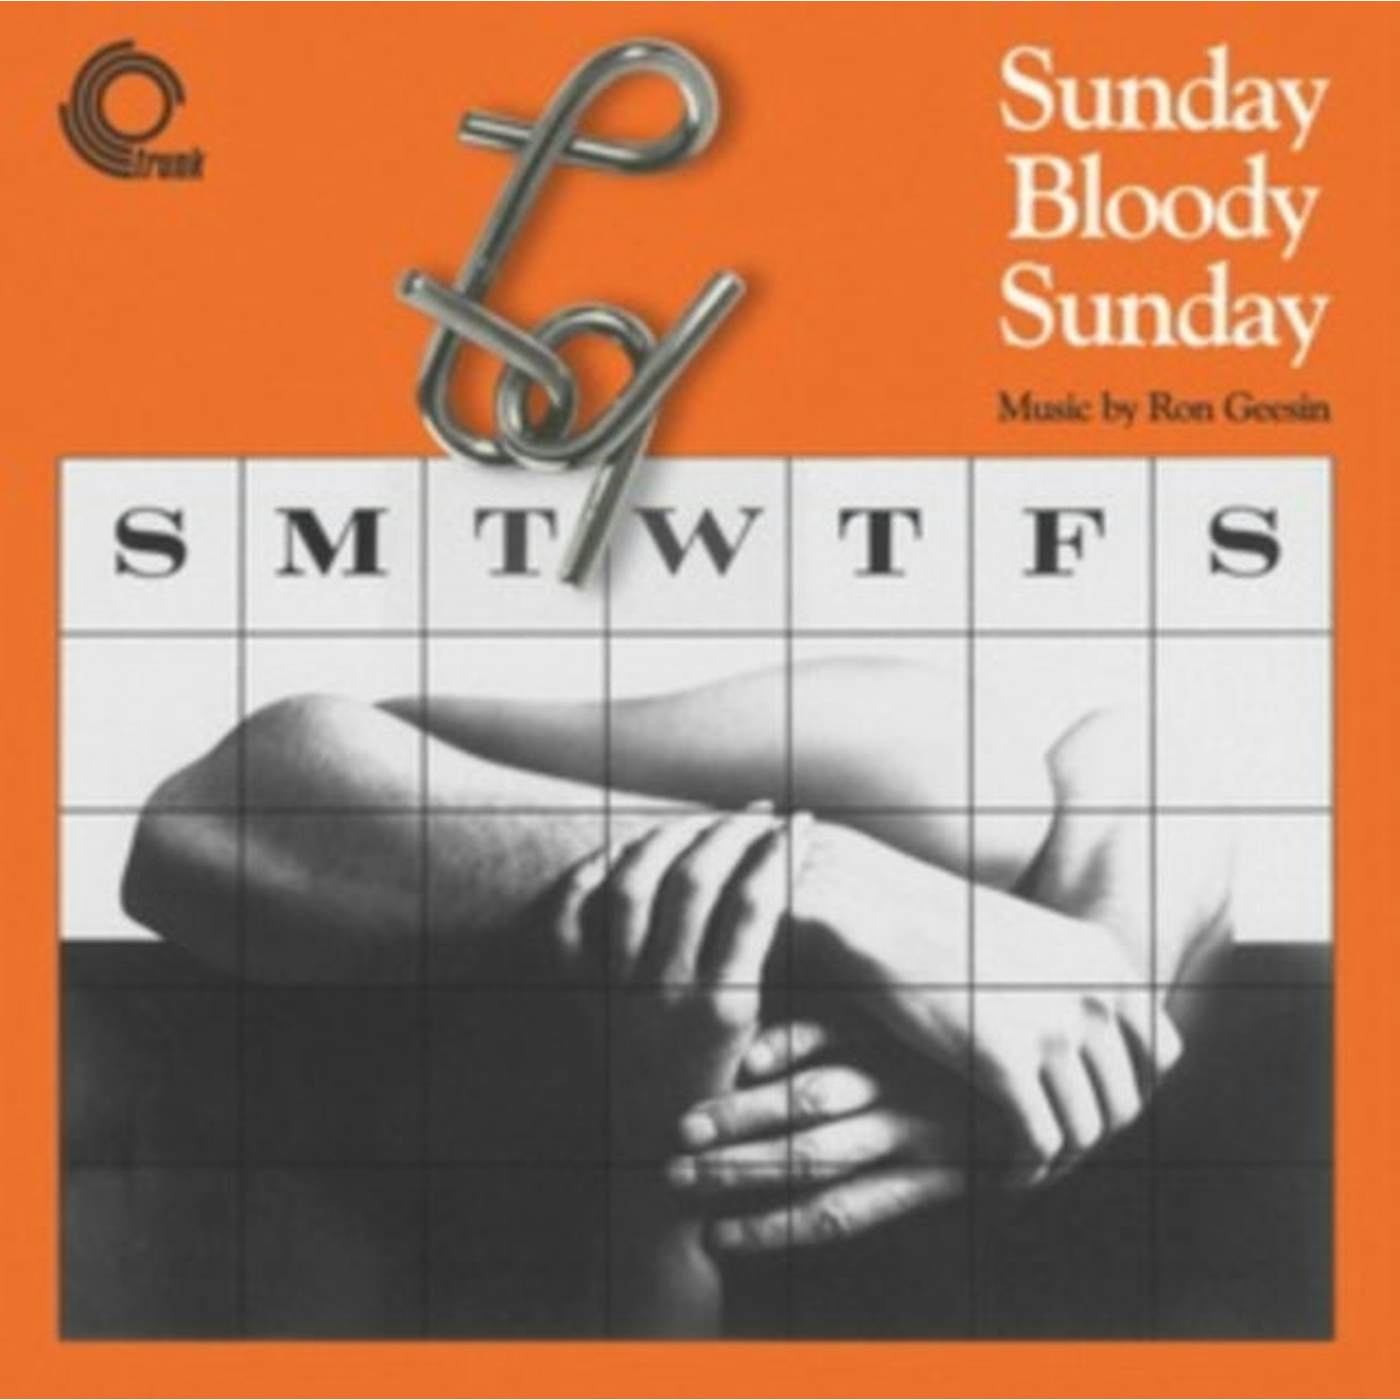 Ron Geesin LP Vinyl Record  Sunday Bloody Sunday Soundtrac